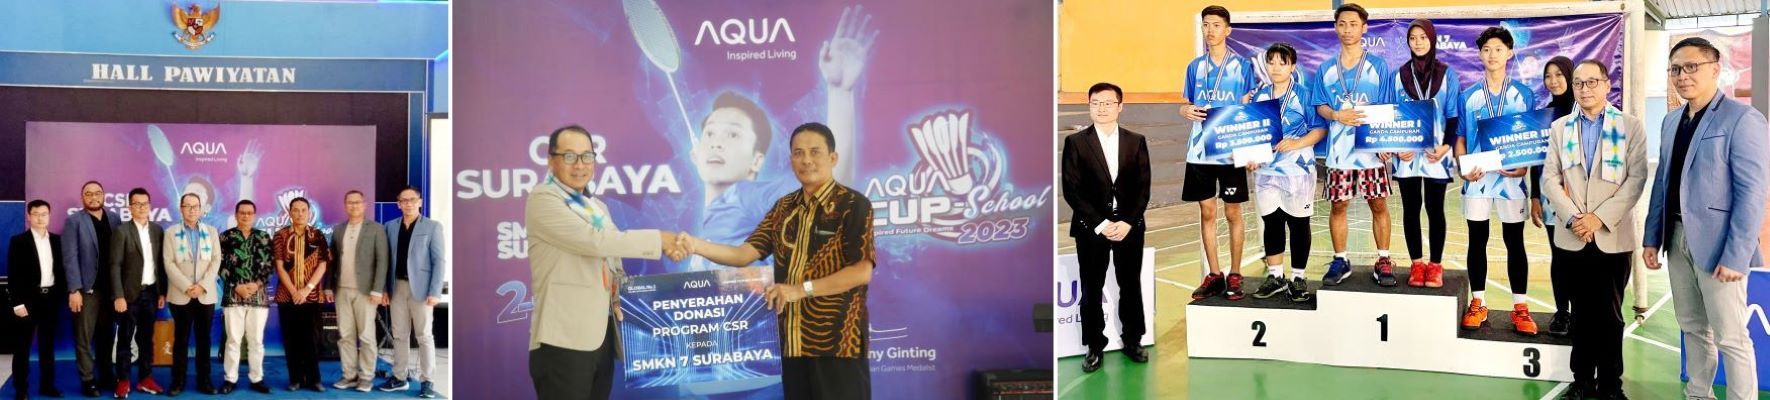 AQUA Elektronik Indonesia Ajak Generasi Muda Kejar Mimpi, Usung Kampanye Inspire Future Dream